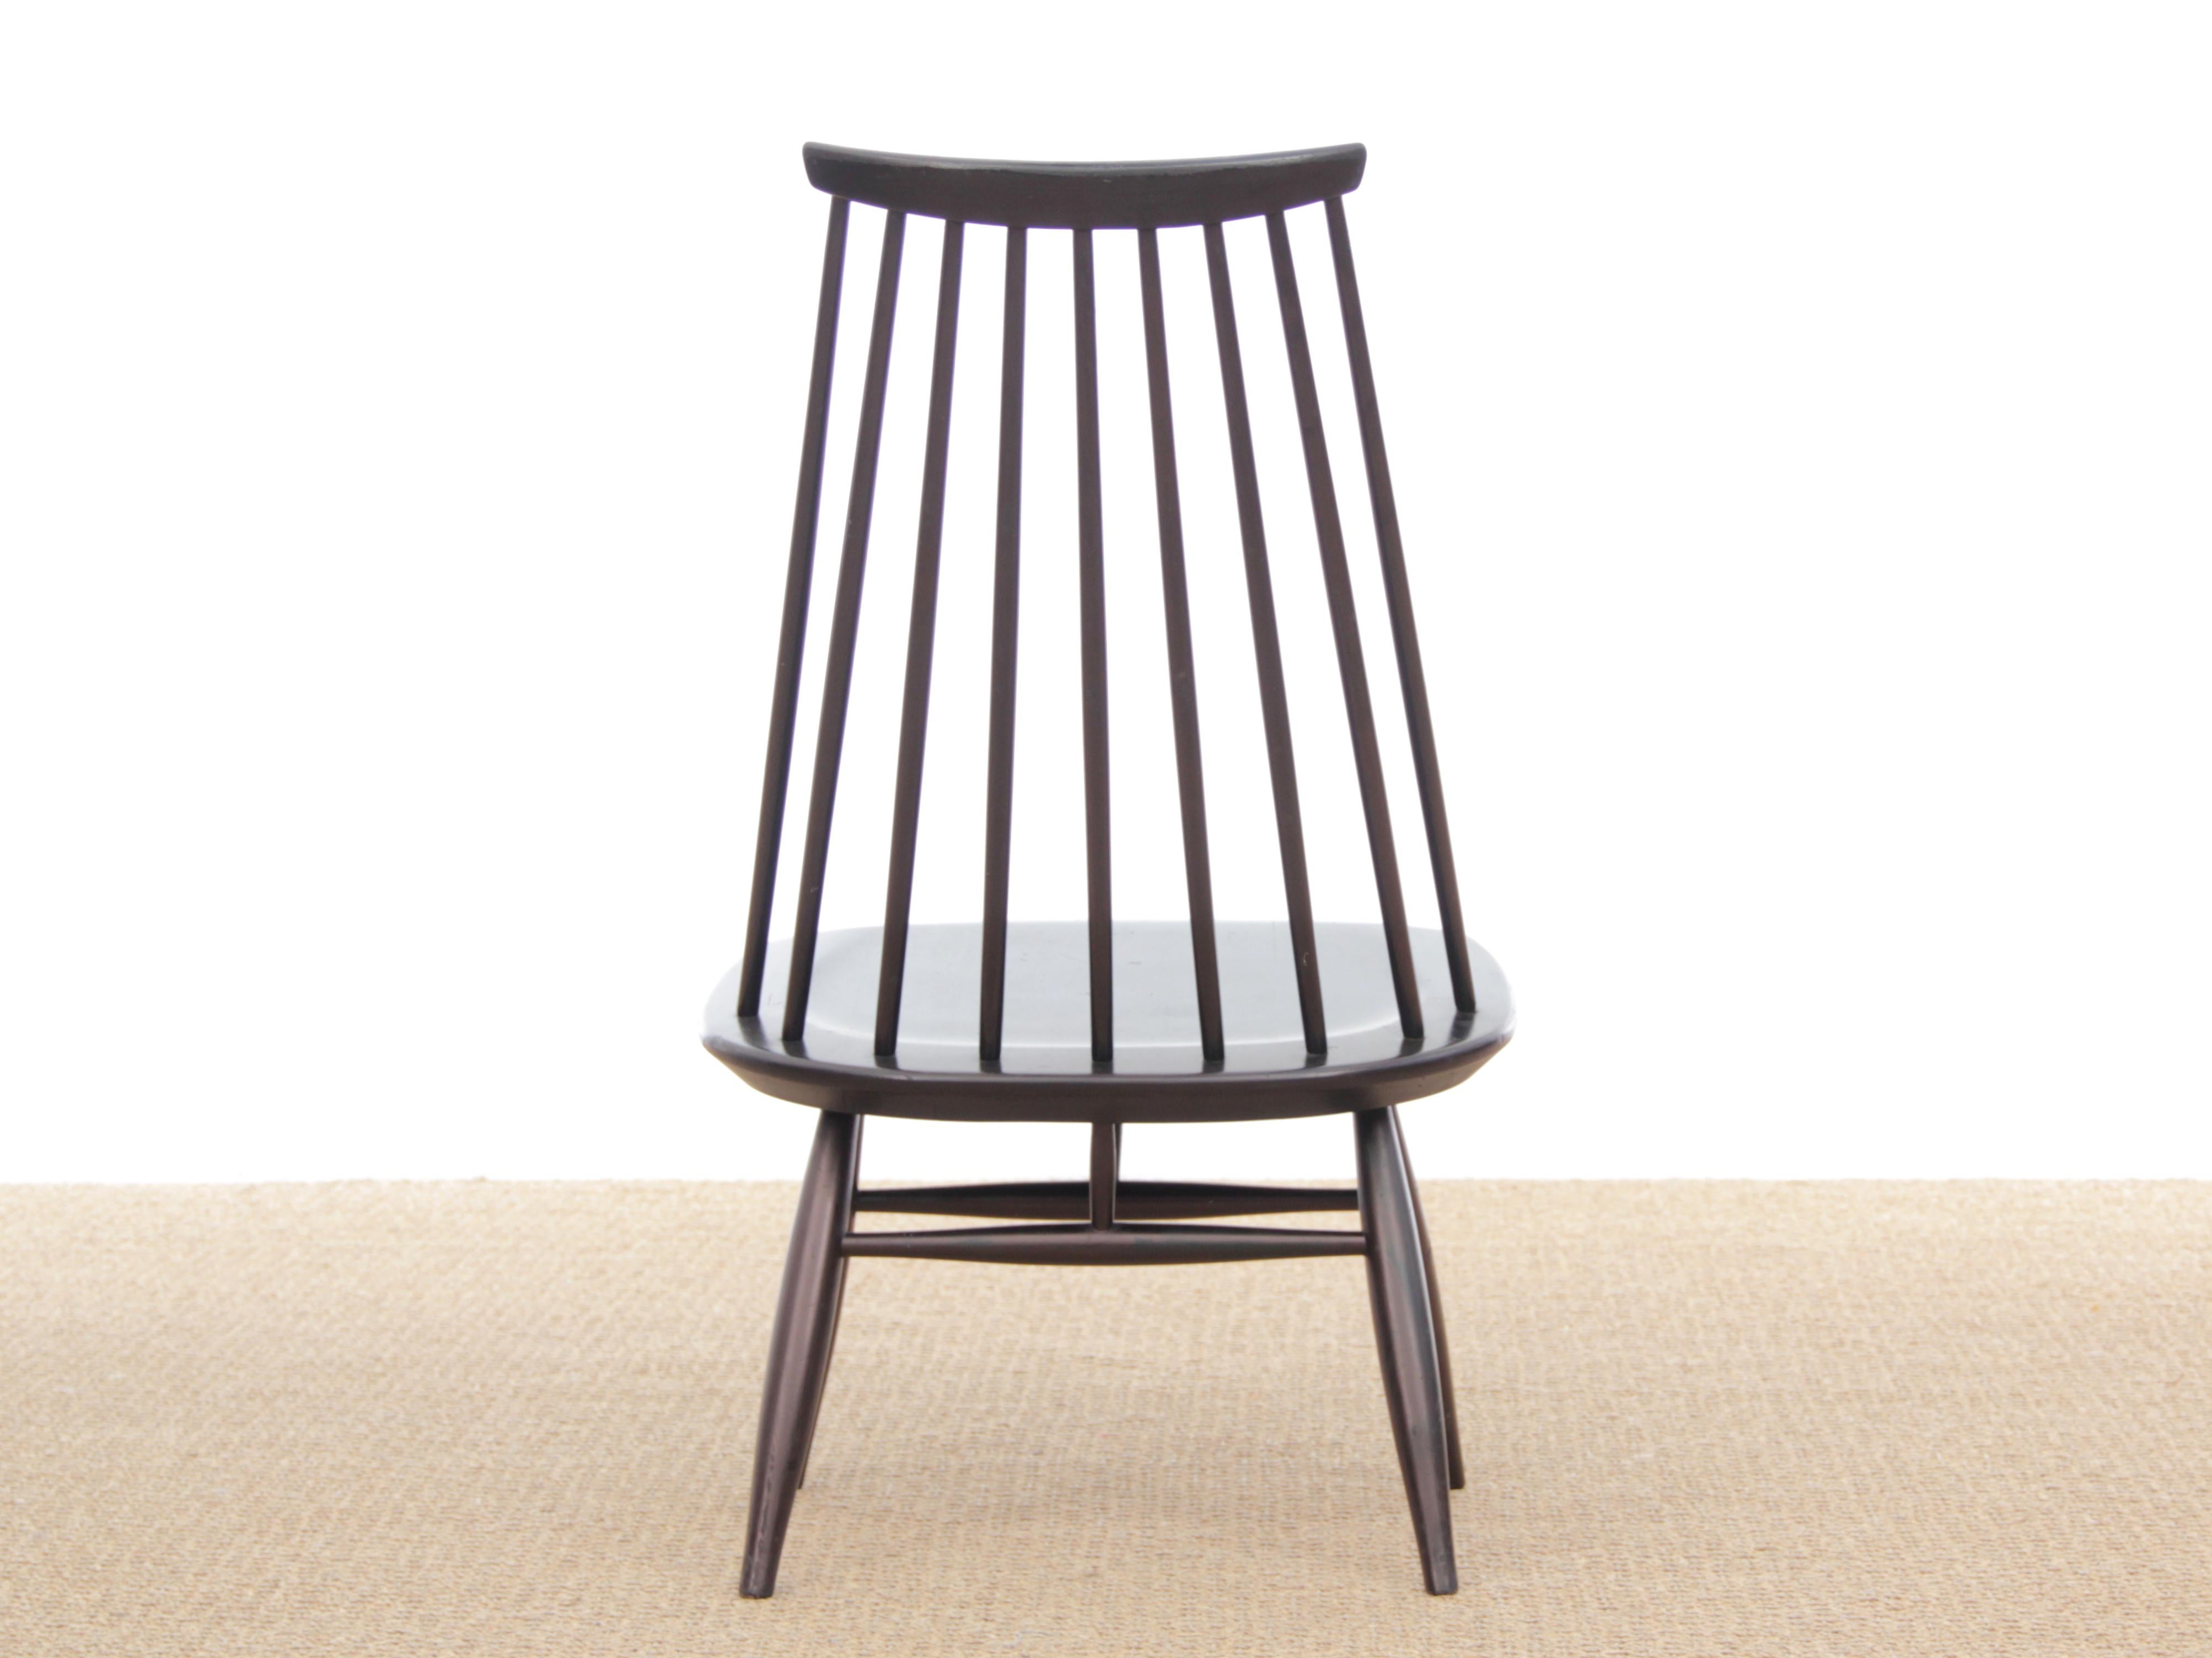 Mid-20th Century Mid-Century Modern Scandinavian Pair of Mademoiselle Chair by Tapiovaara For Sale